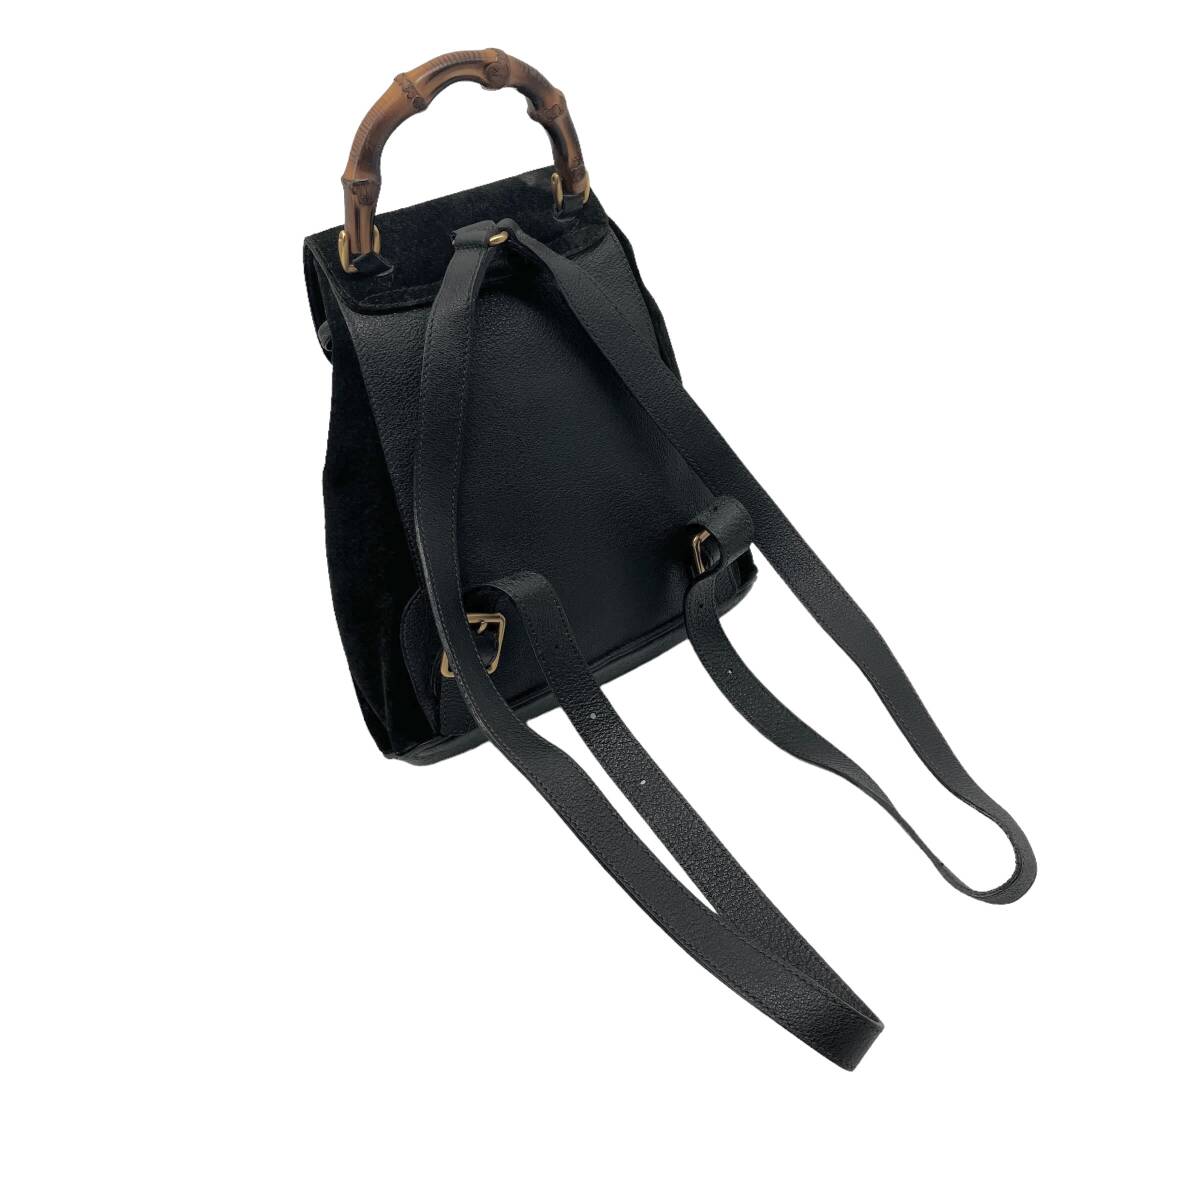  Gucci рюкзак замша черный чёрный bamboo кожа кожа рюкзак GUCCI брендовая сумка оттенок золота металлические принадлежности 